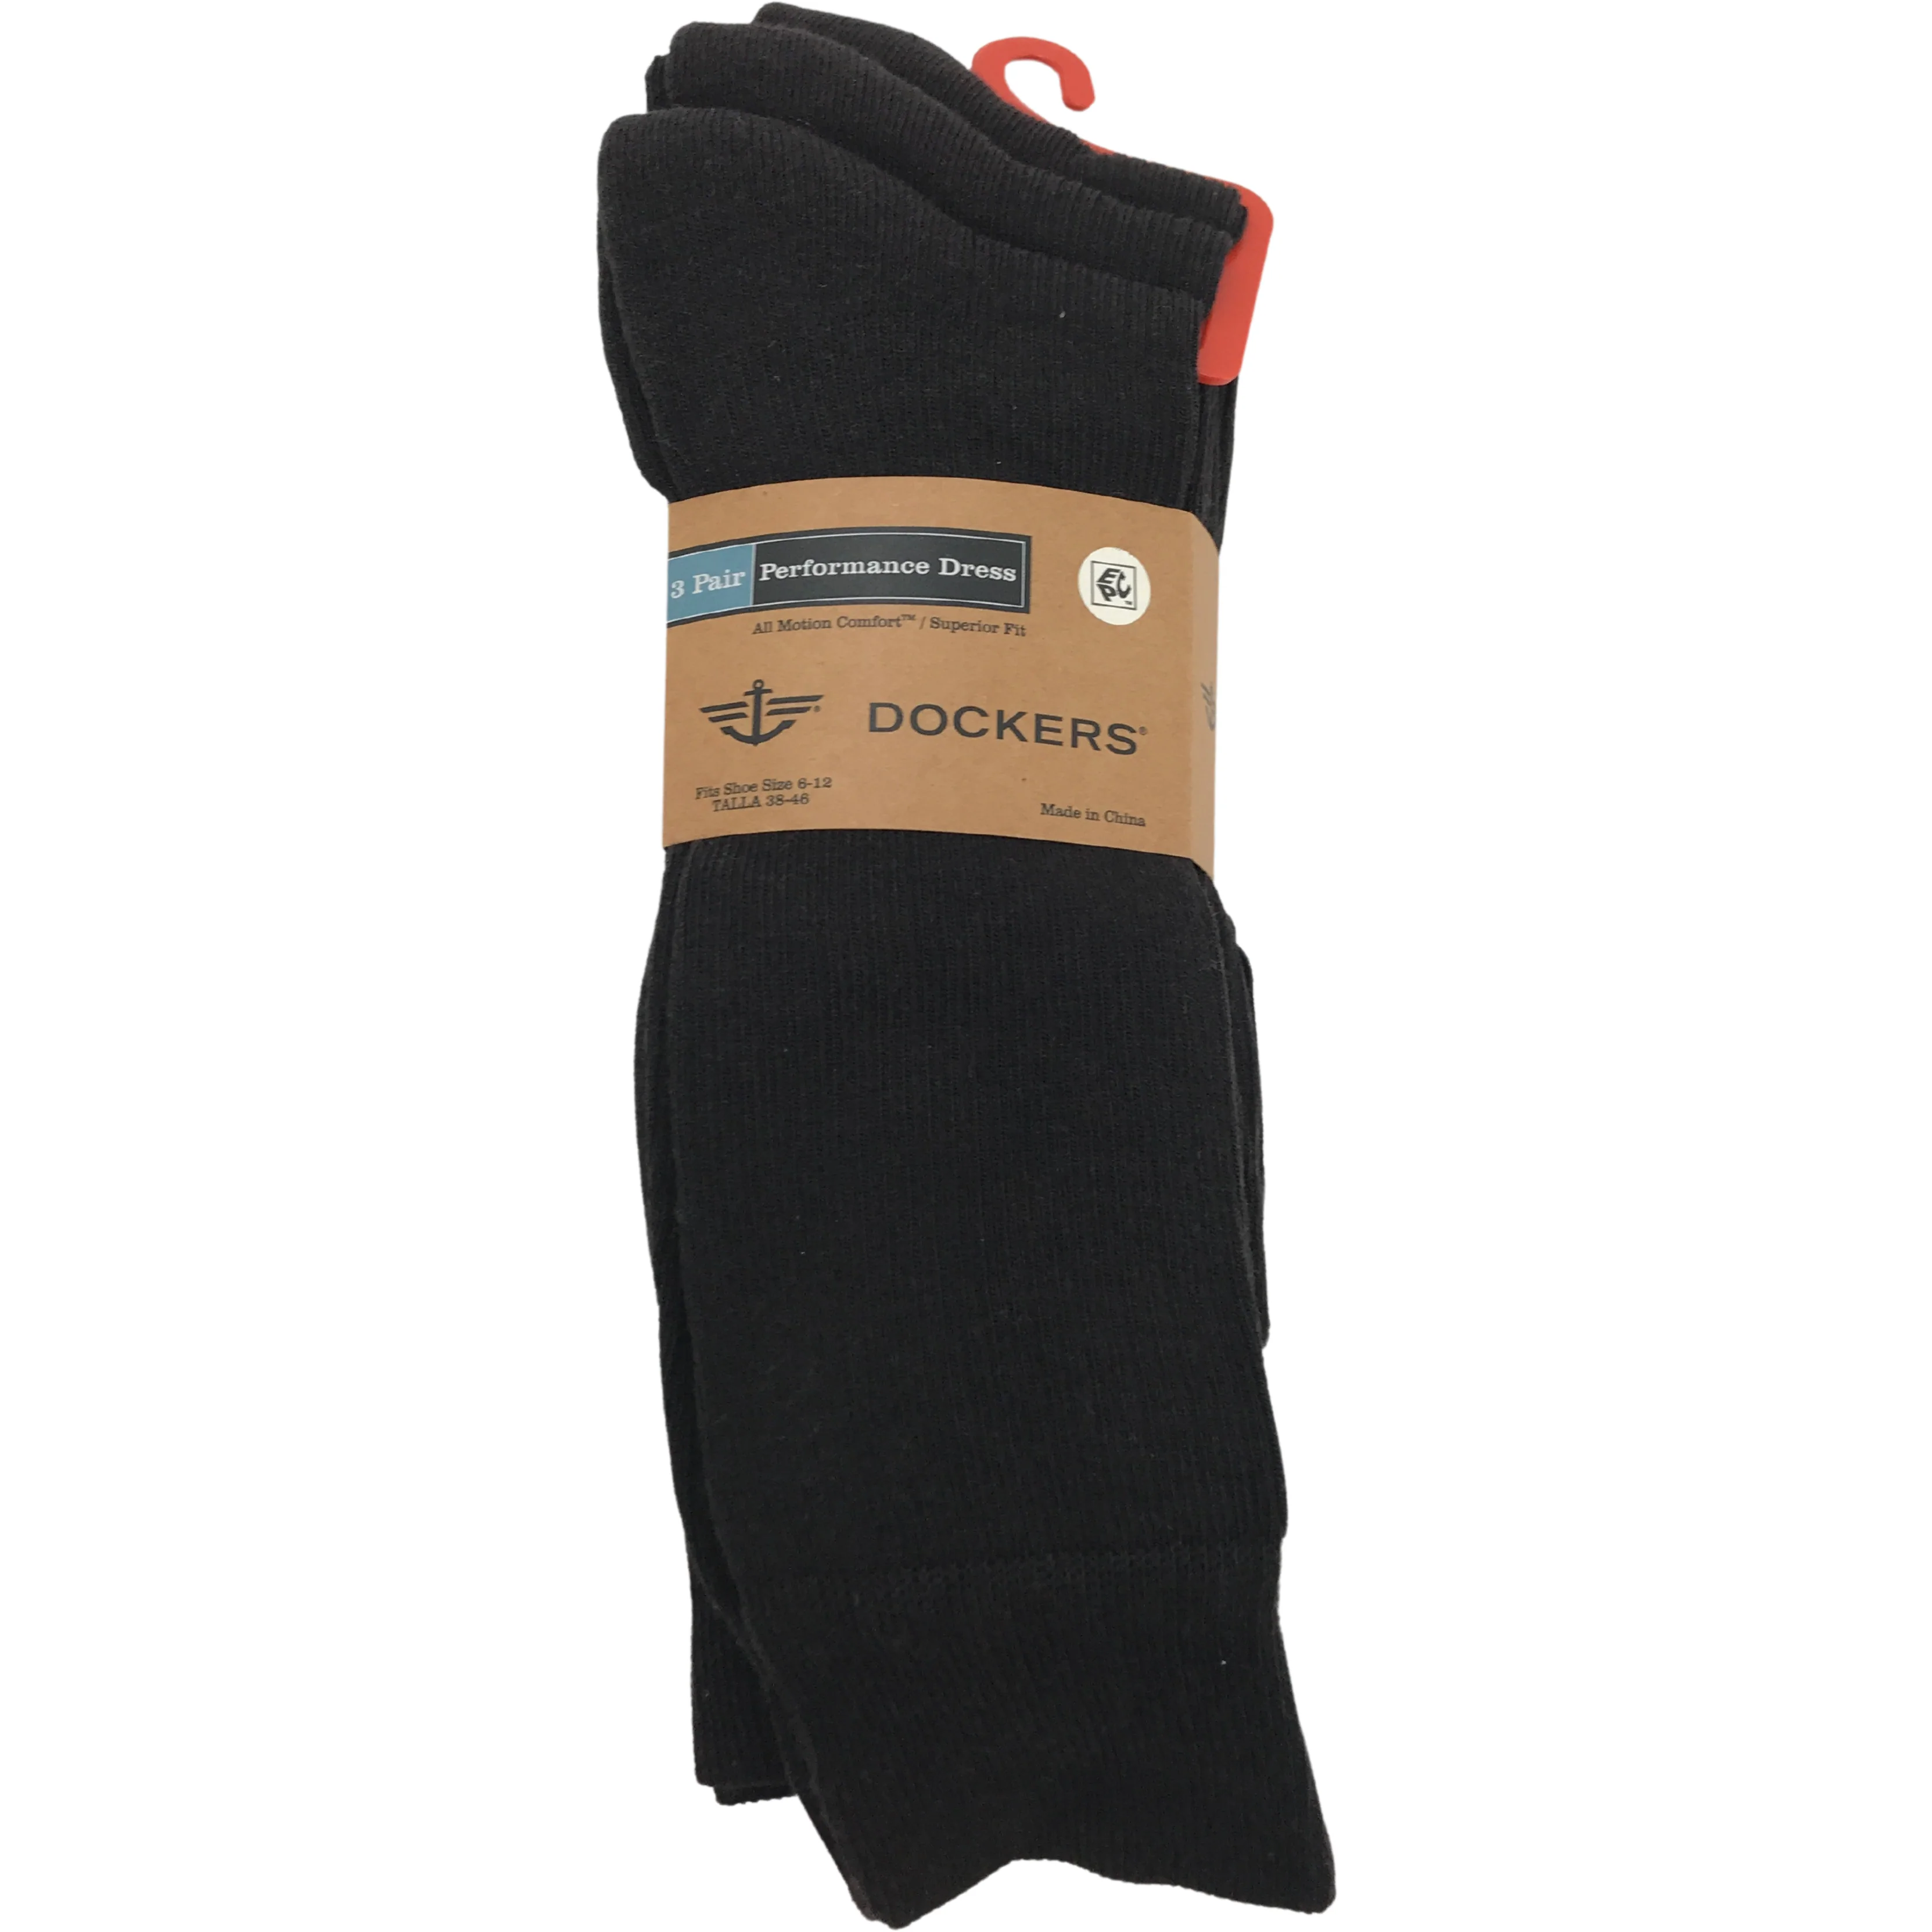 Dockers Men's Dress Socks / Crew Socks / 3 Pack / Brown / Size 6-12